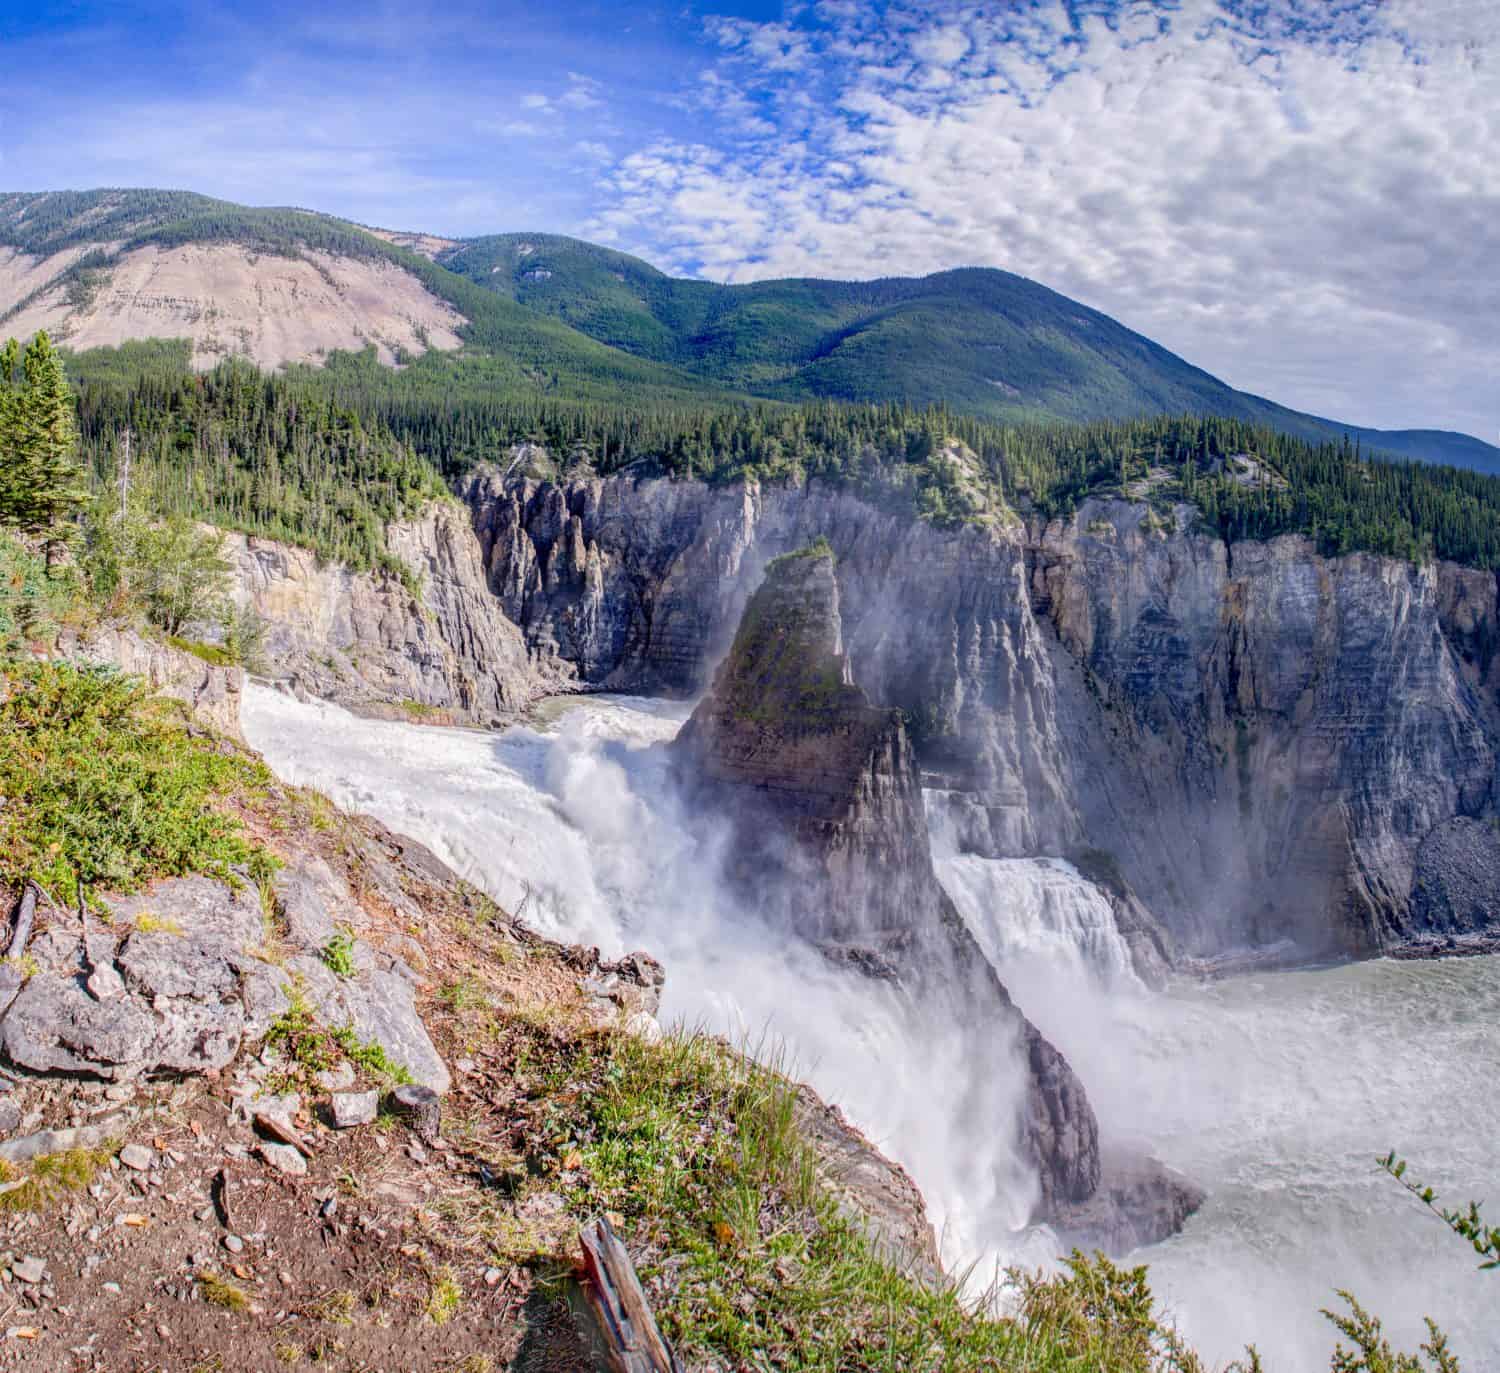 96 m drop of Virginia Falls - South Nahanni river, Northwest Territories, Canada